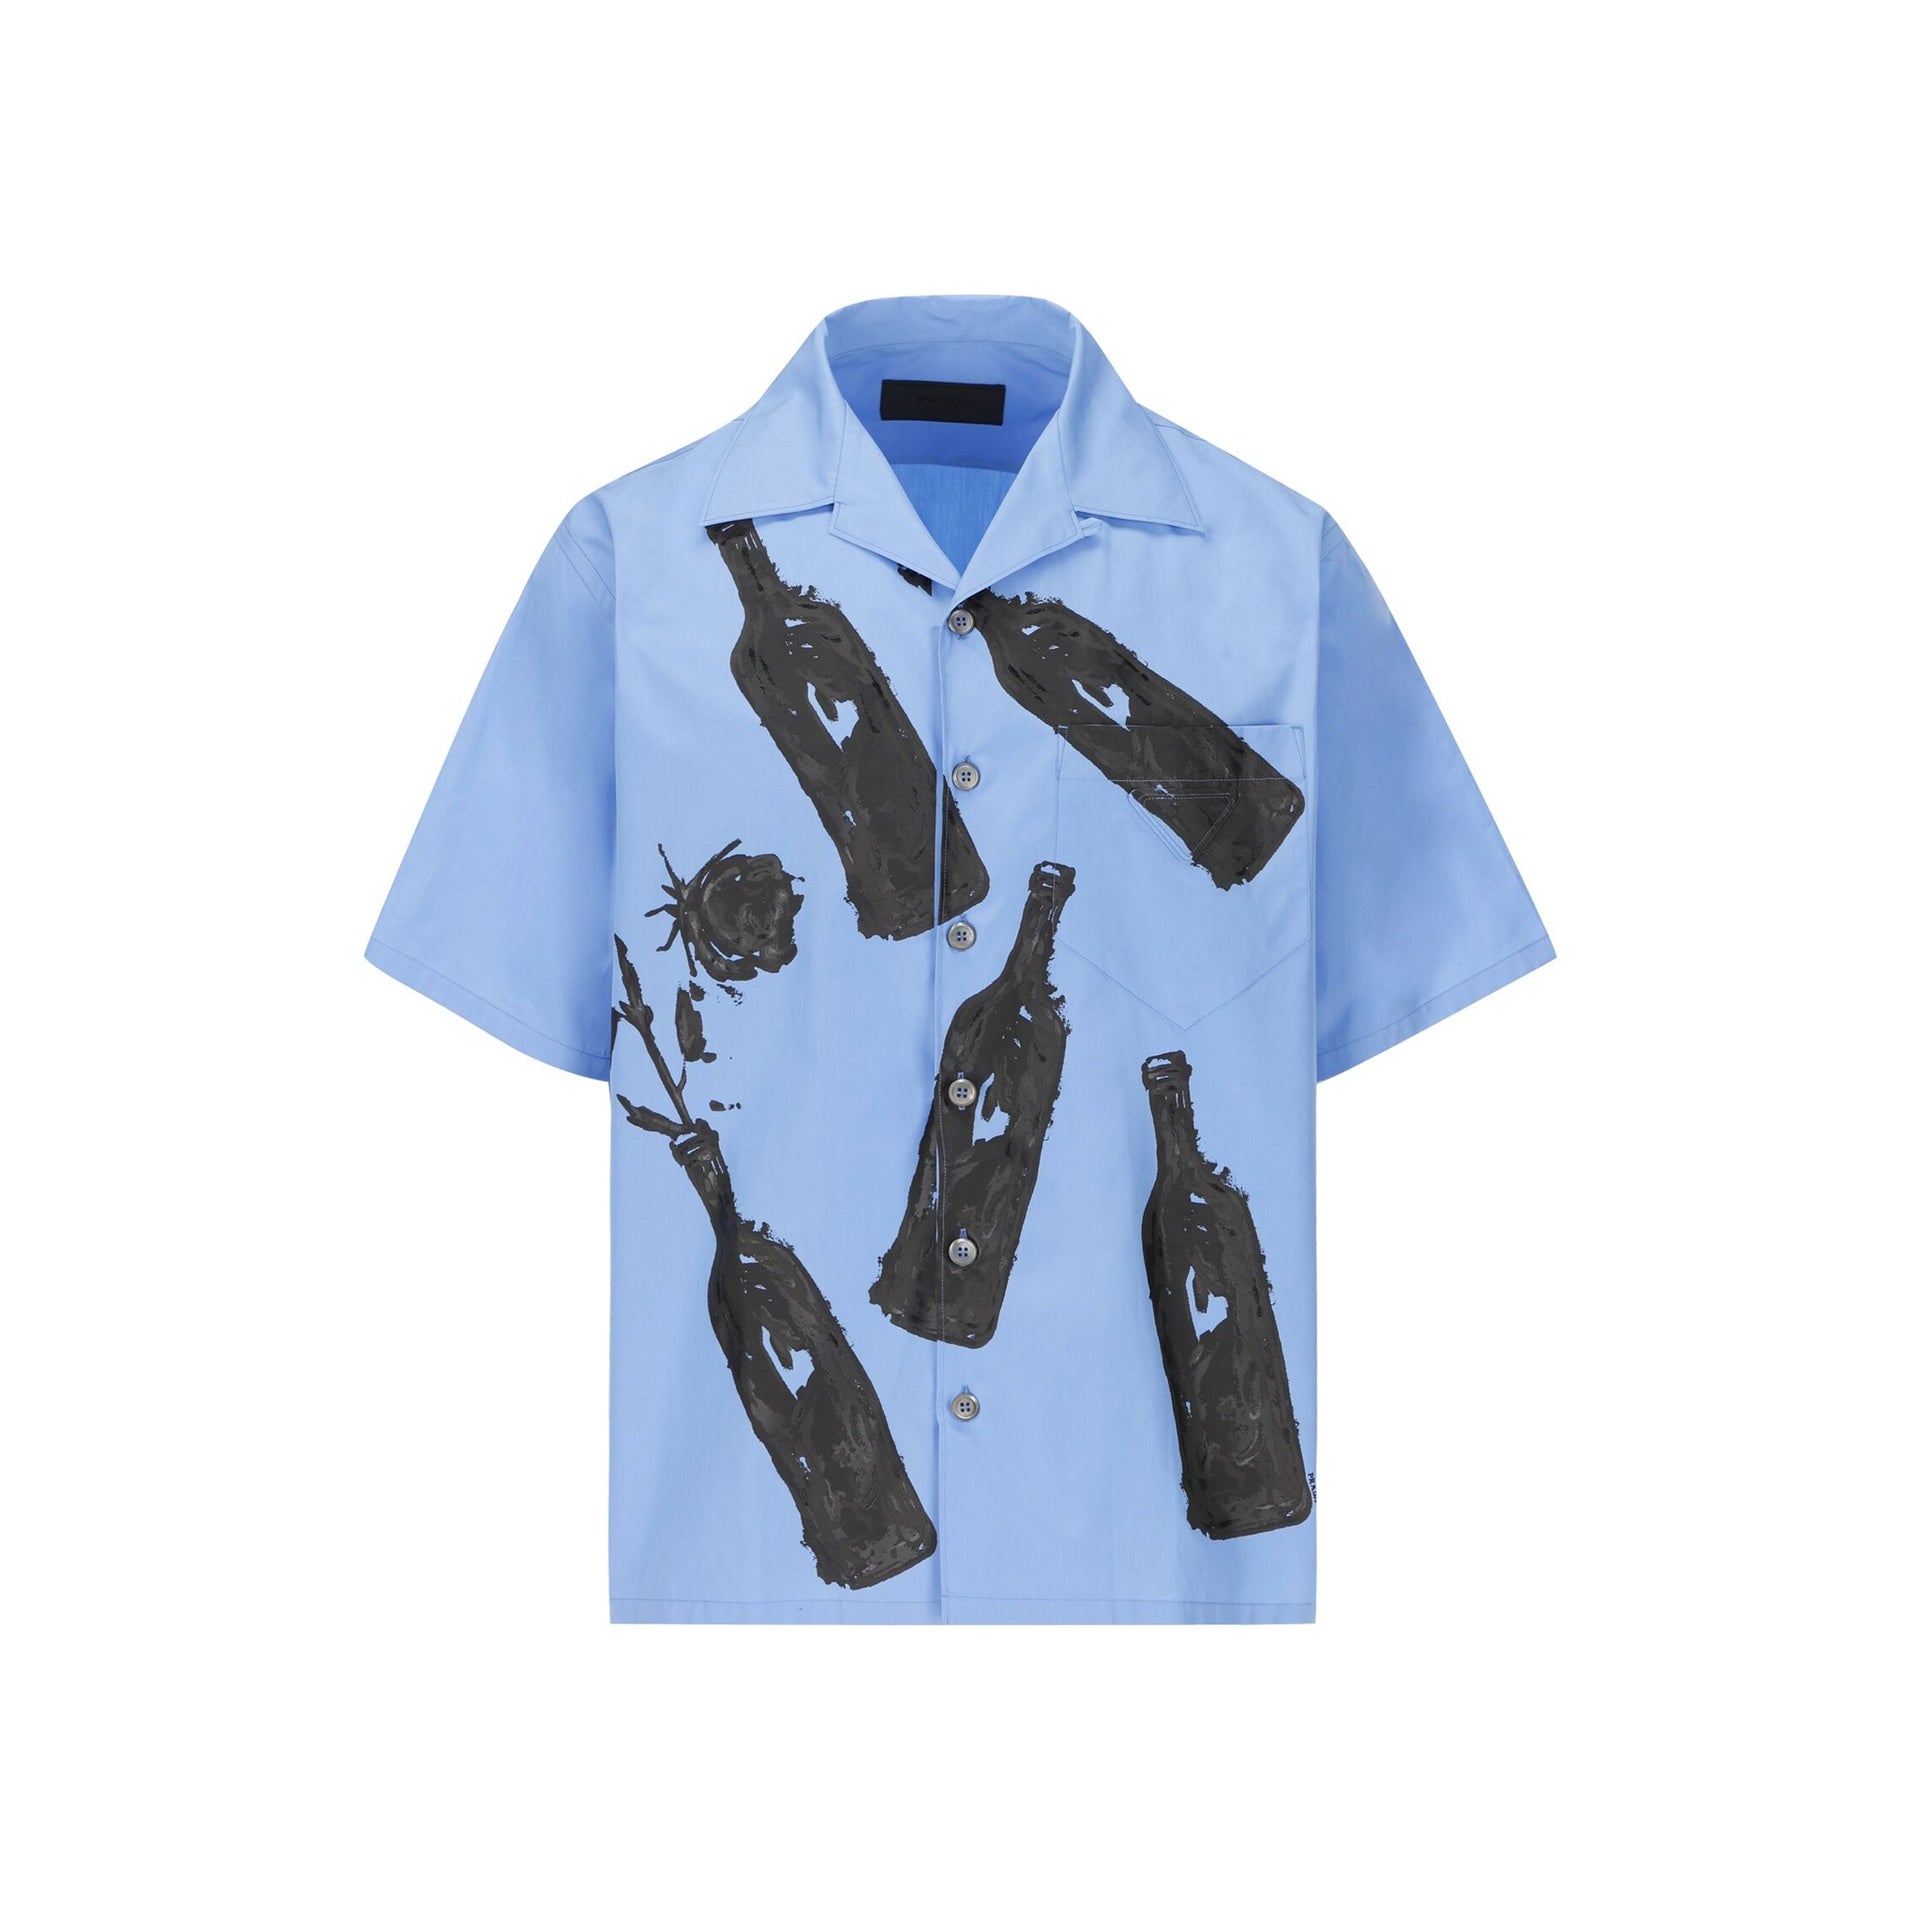 PRADA-Outlet-Sale-Prada Printed Cotton Shirt-MEN CLOTHING-BLUE-L-ARCHIVIST